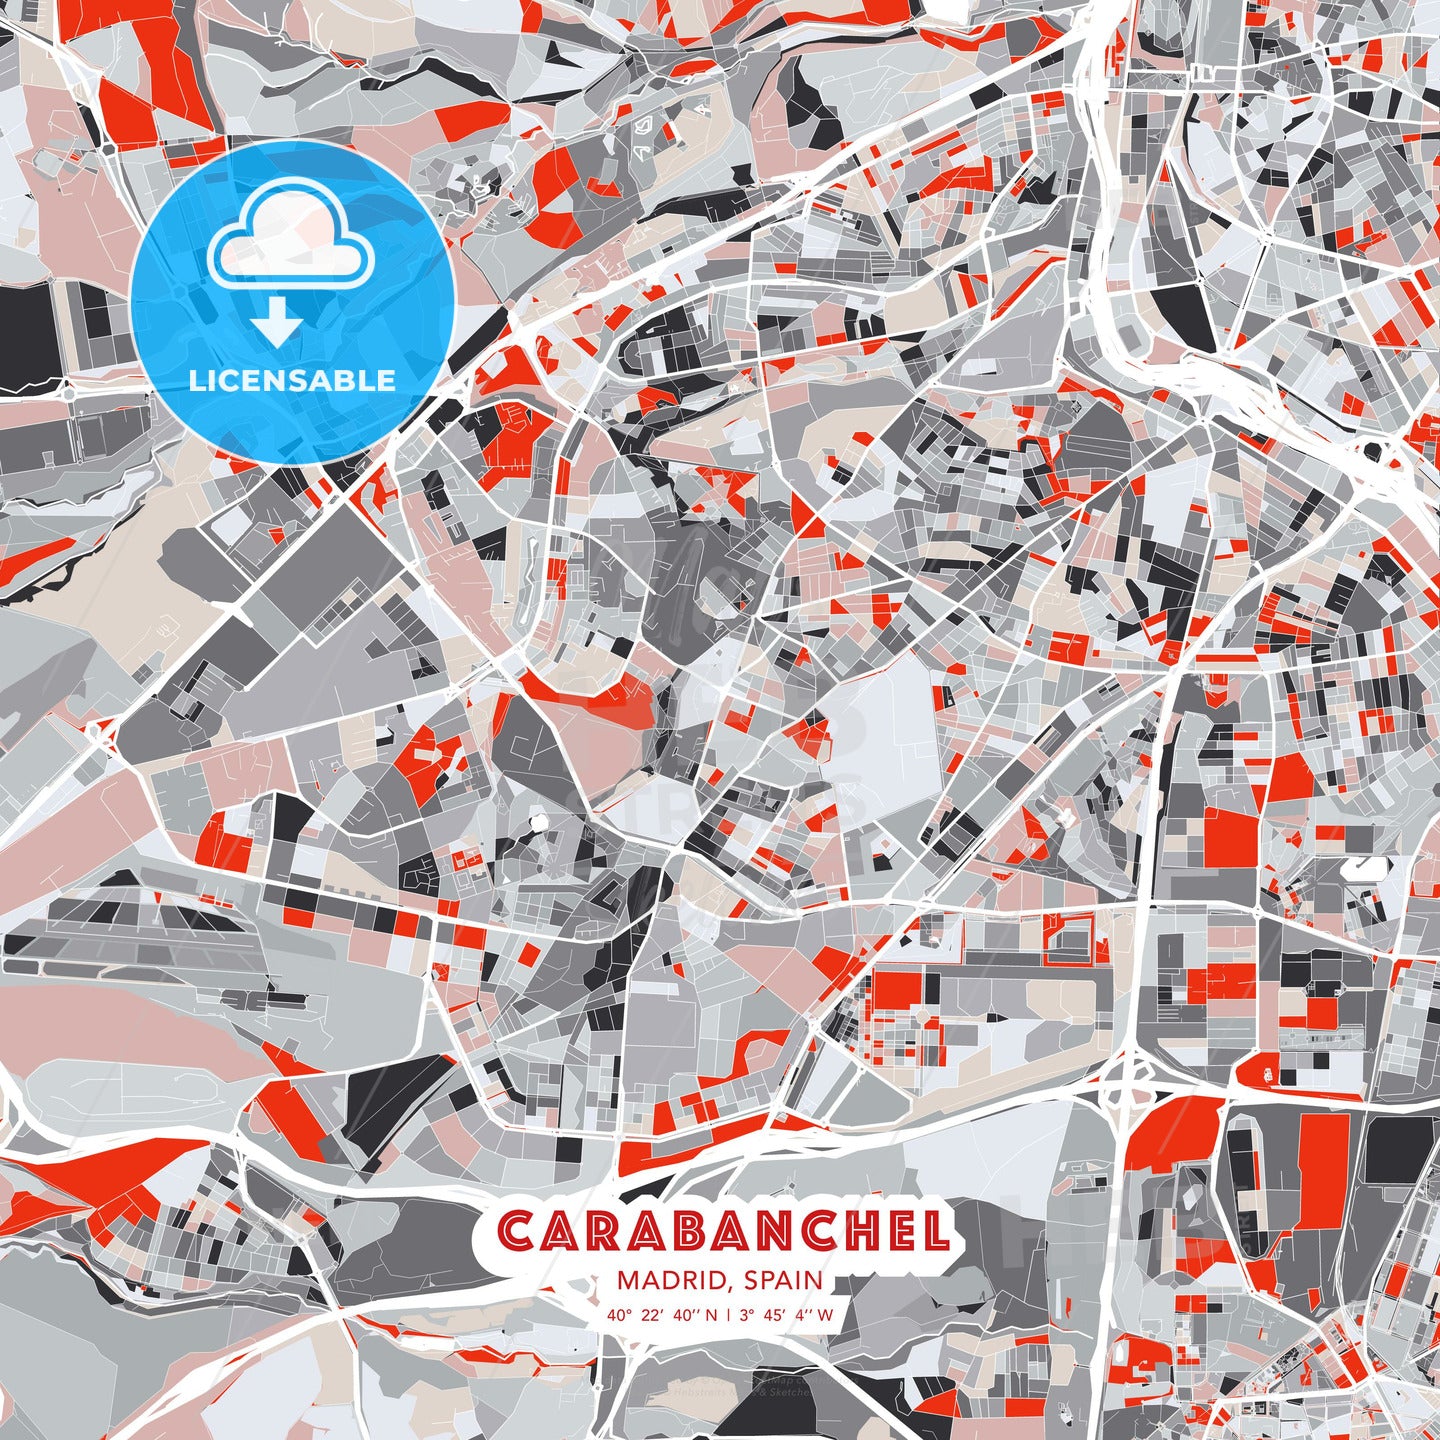 Carabanchel, Madrid, Spain, modern map - HEBSTREITS Sketches